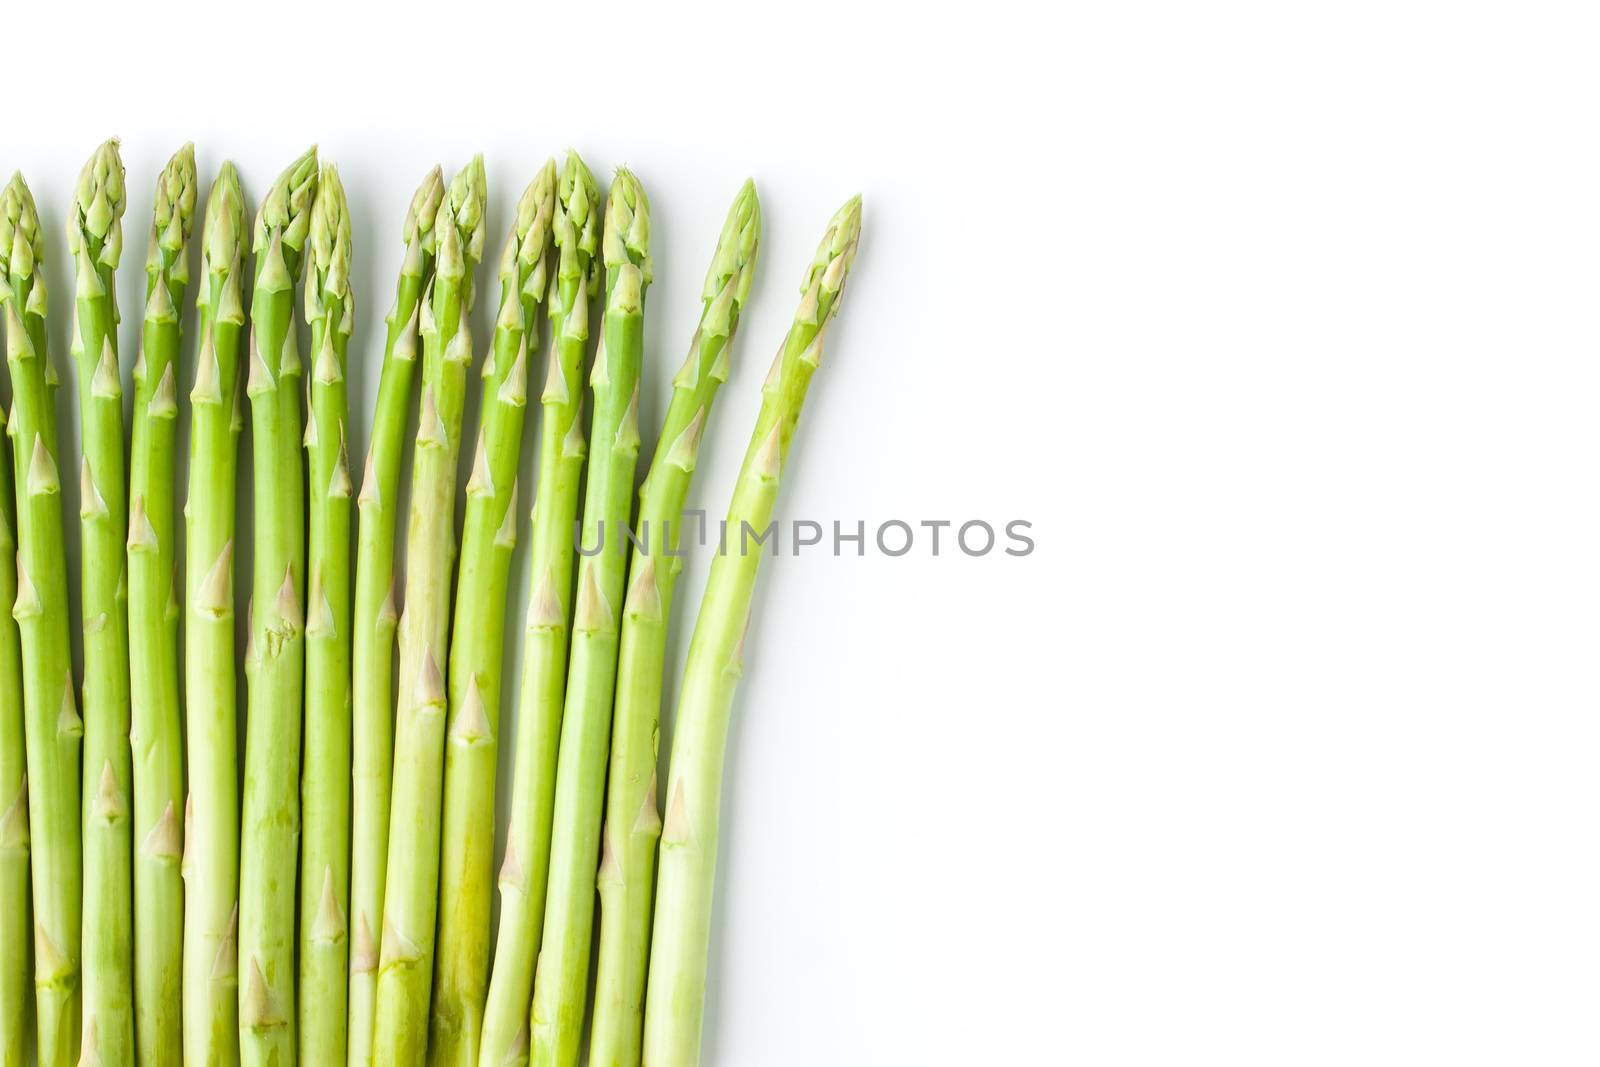 Green asparagus at the left by Deniskarpenkov